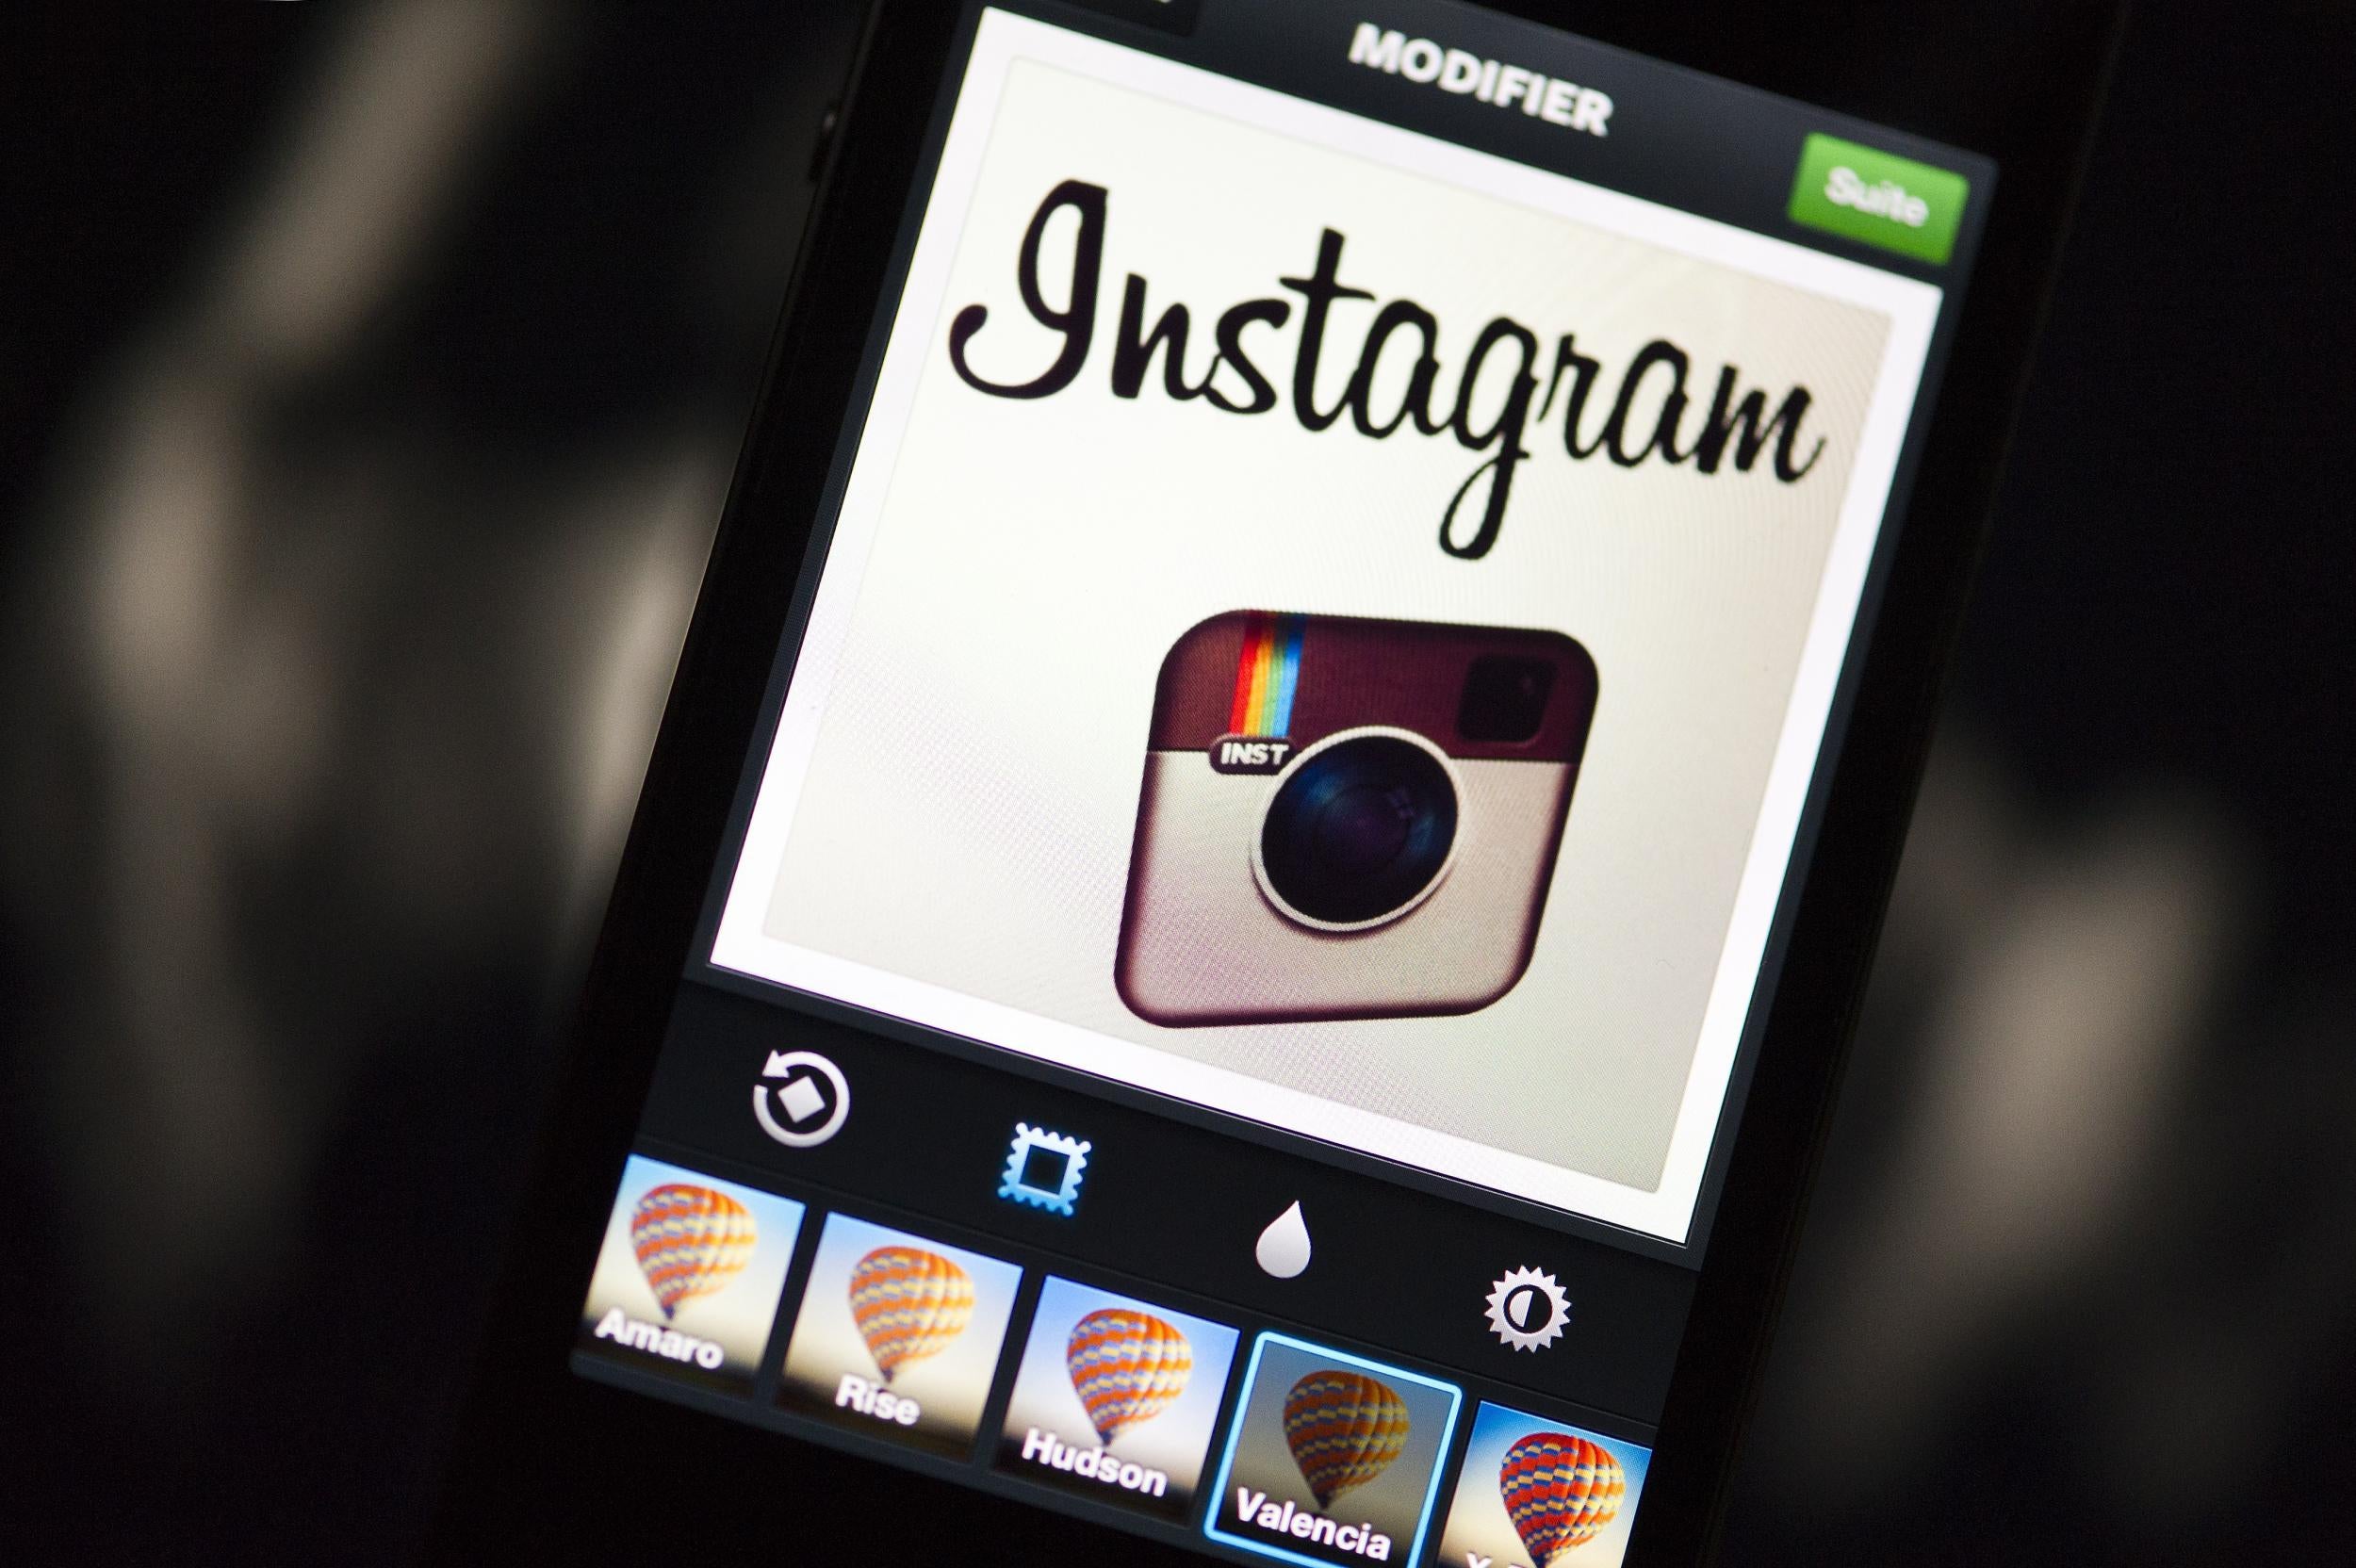 Instagram was sold to Facebook in 2012 for $1 billion